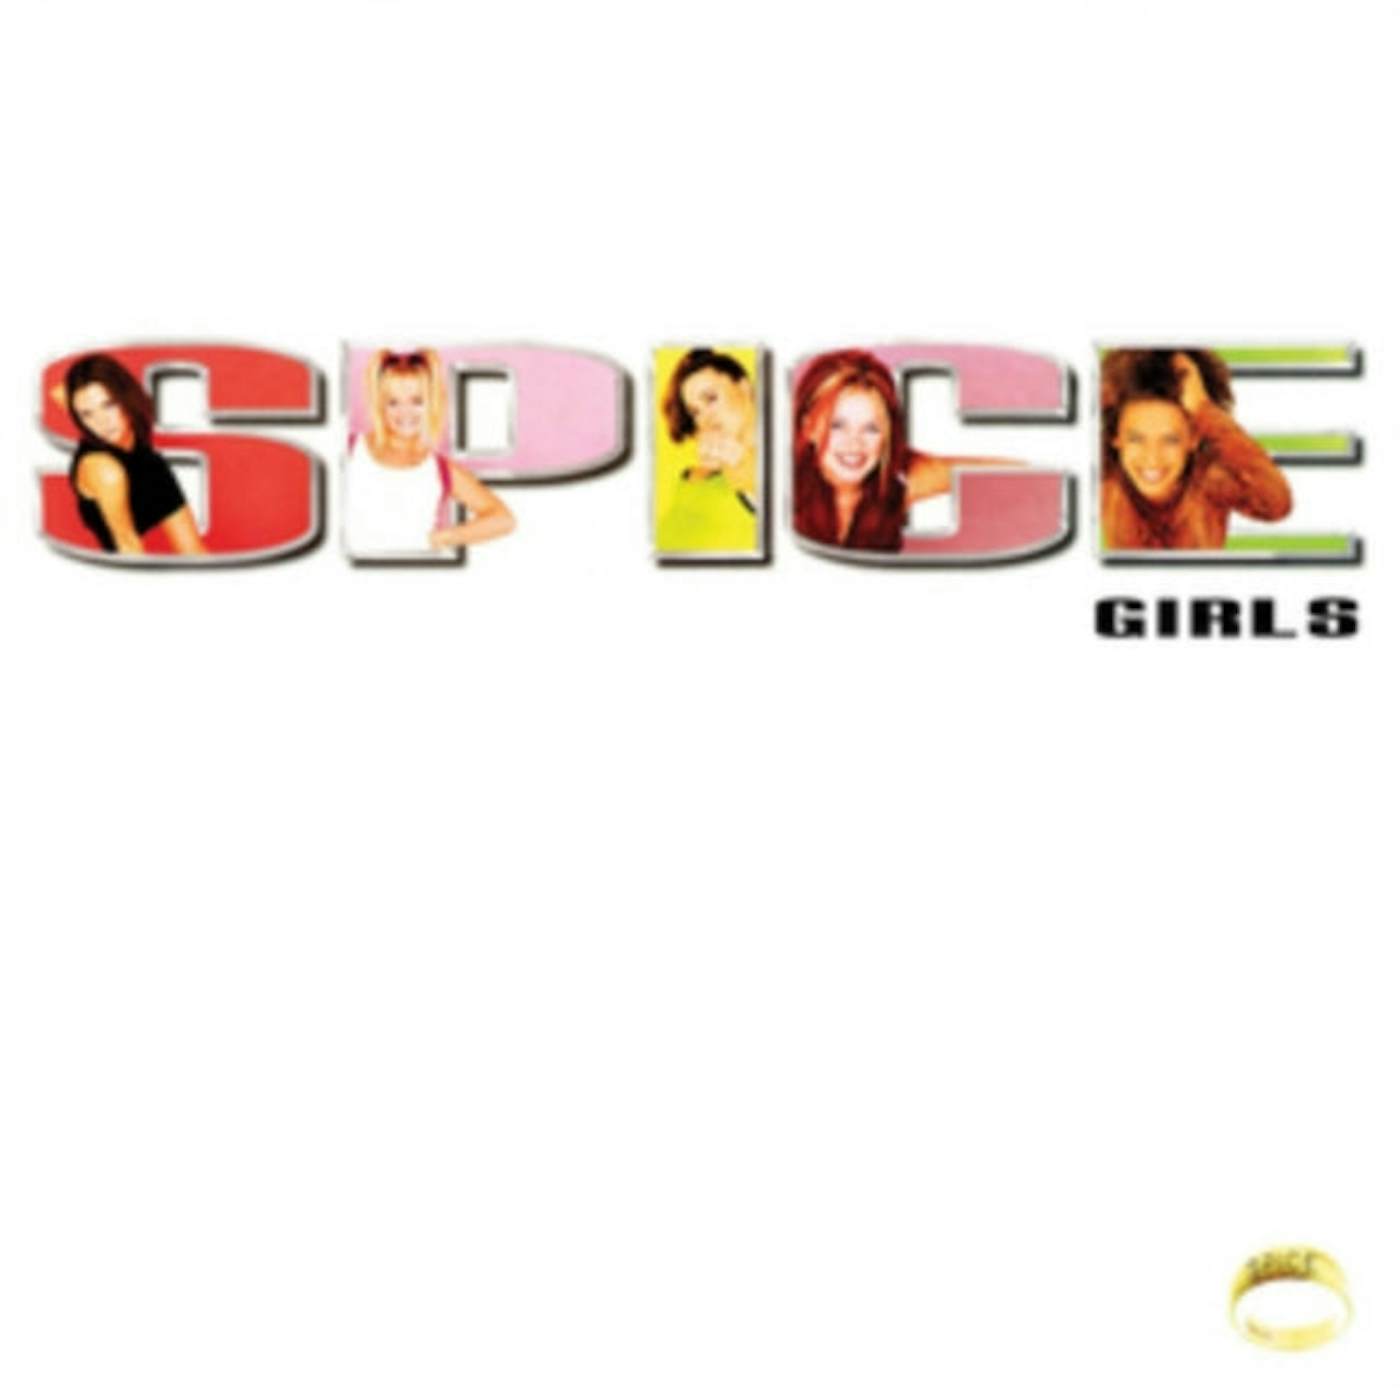 The Spice Girls LP Vinyl Record - Spice